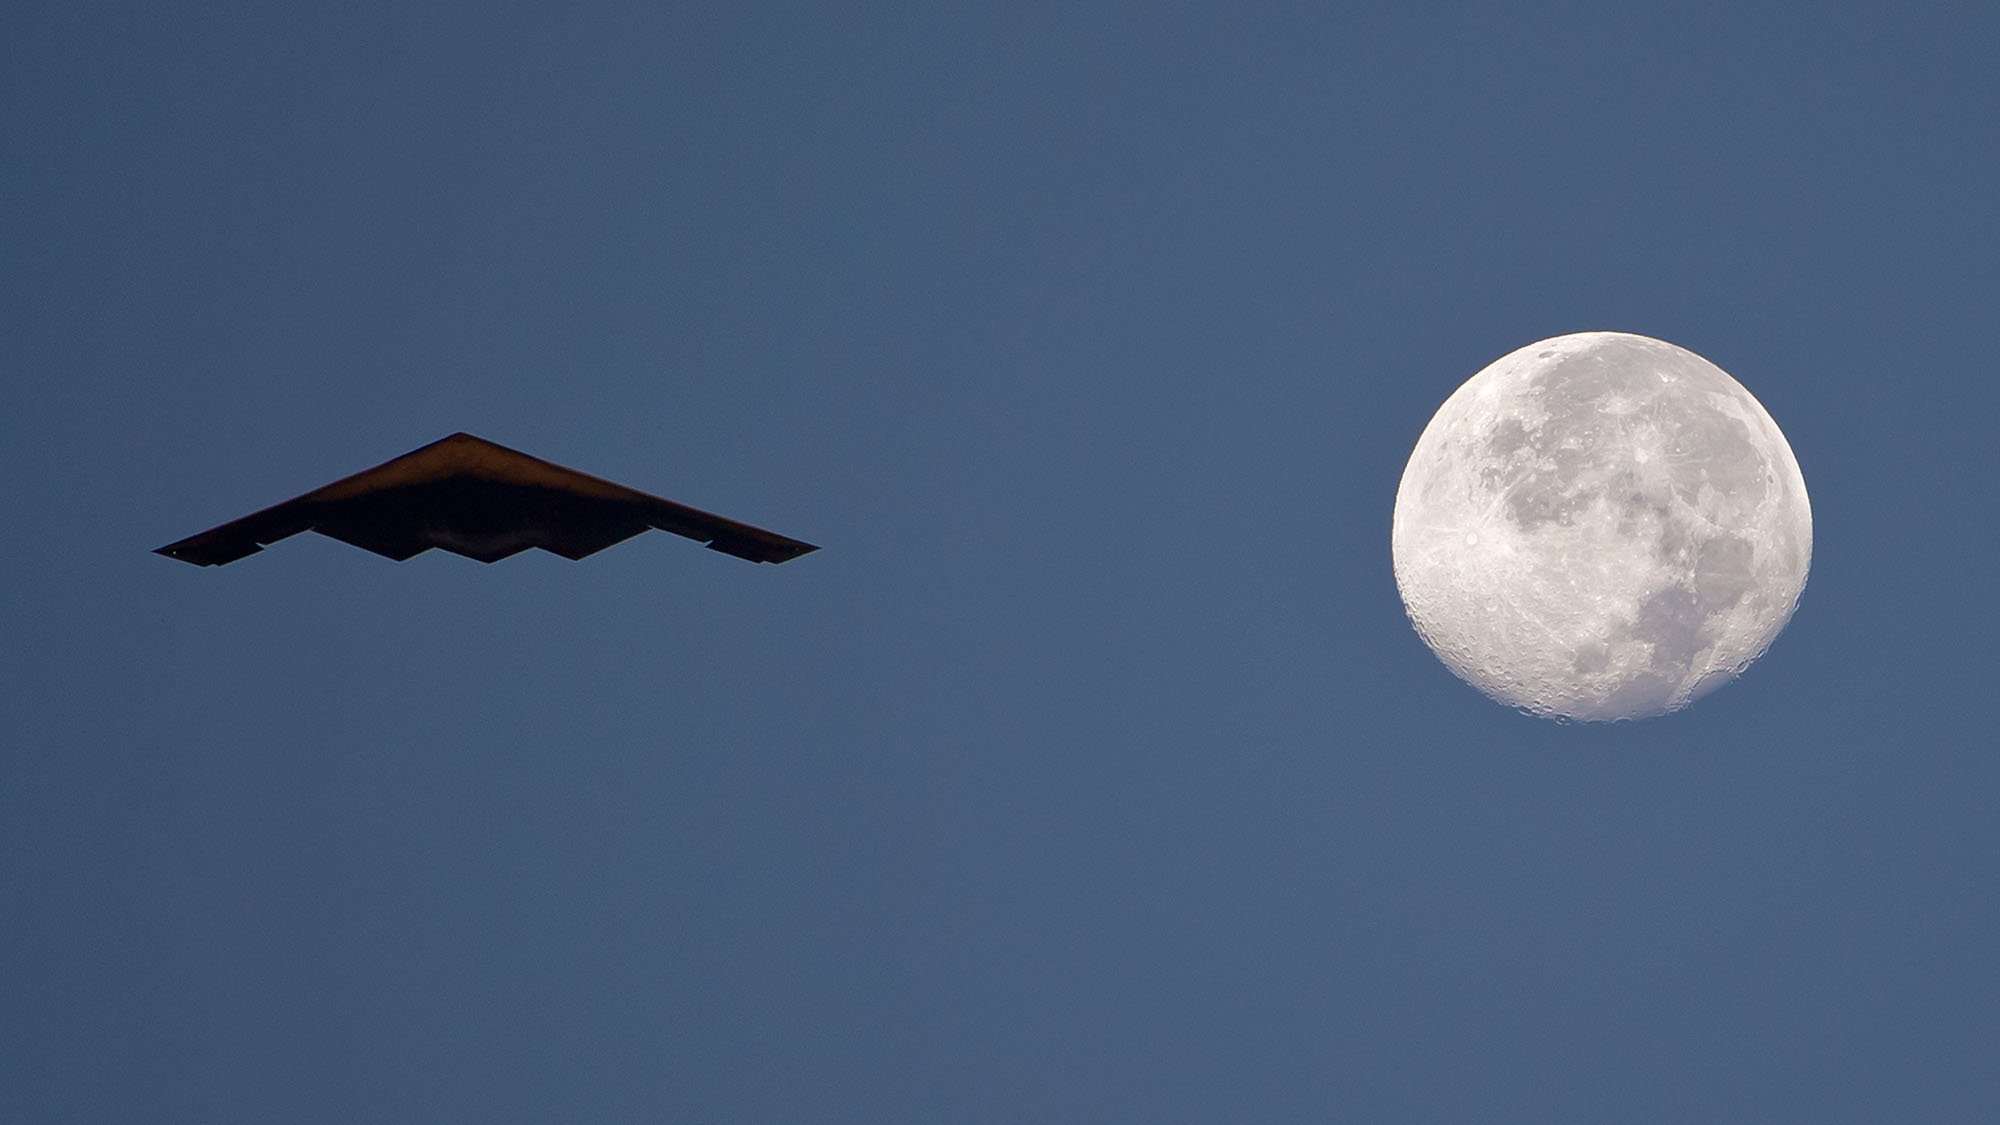 B-2 Spirit Stealth Bomber flying with full moon in sky